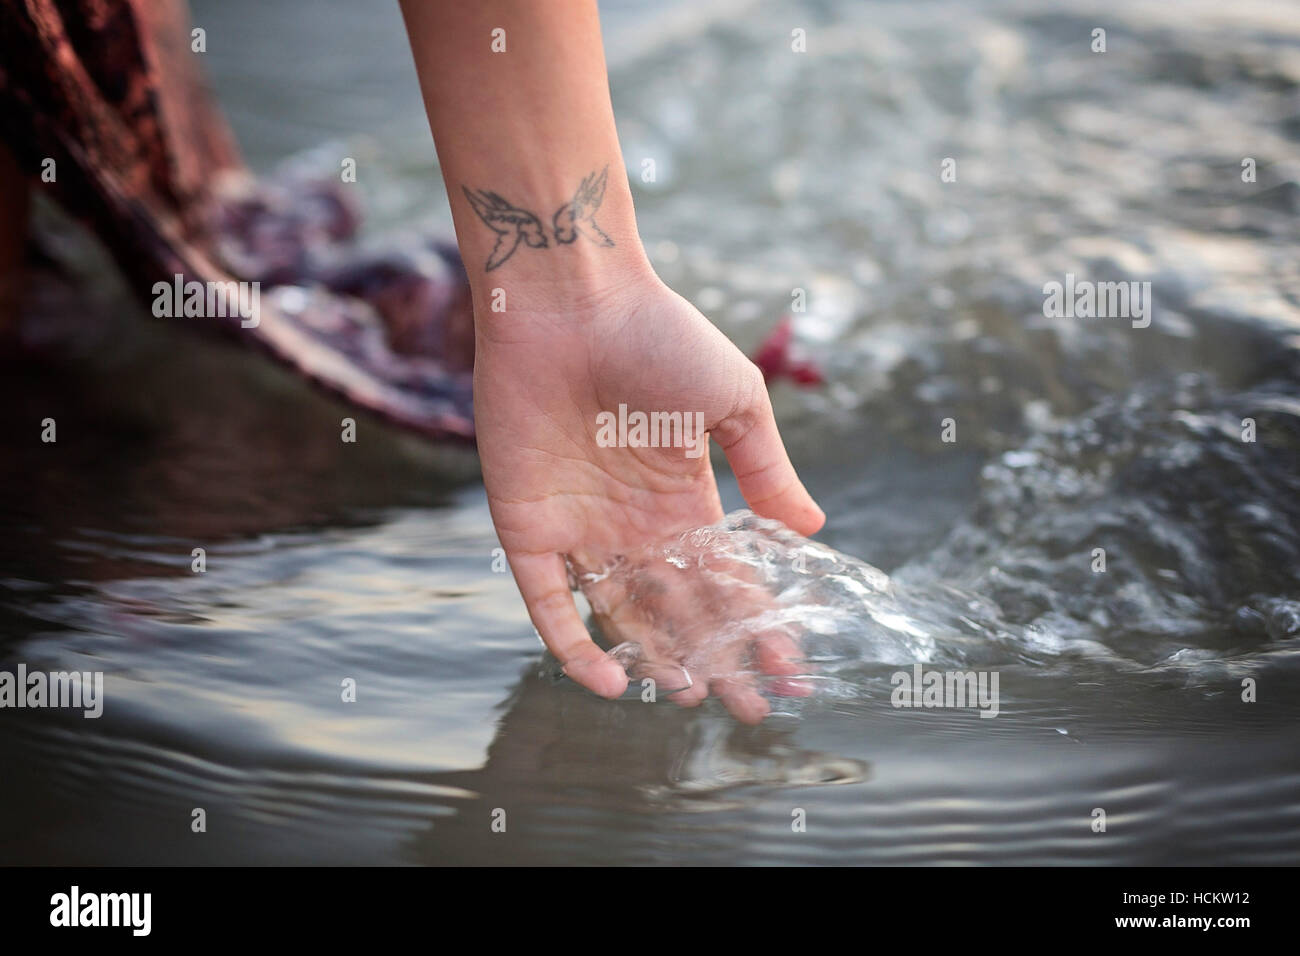 Woman's Hand in running water Stock Photo